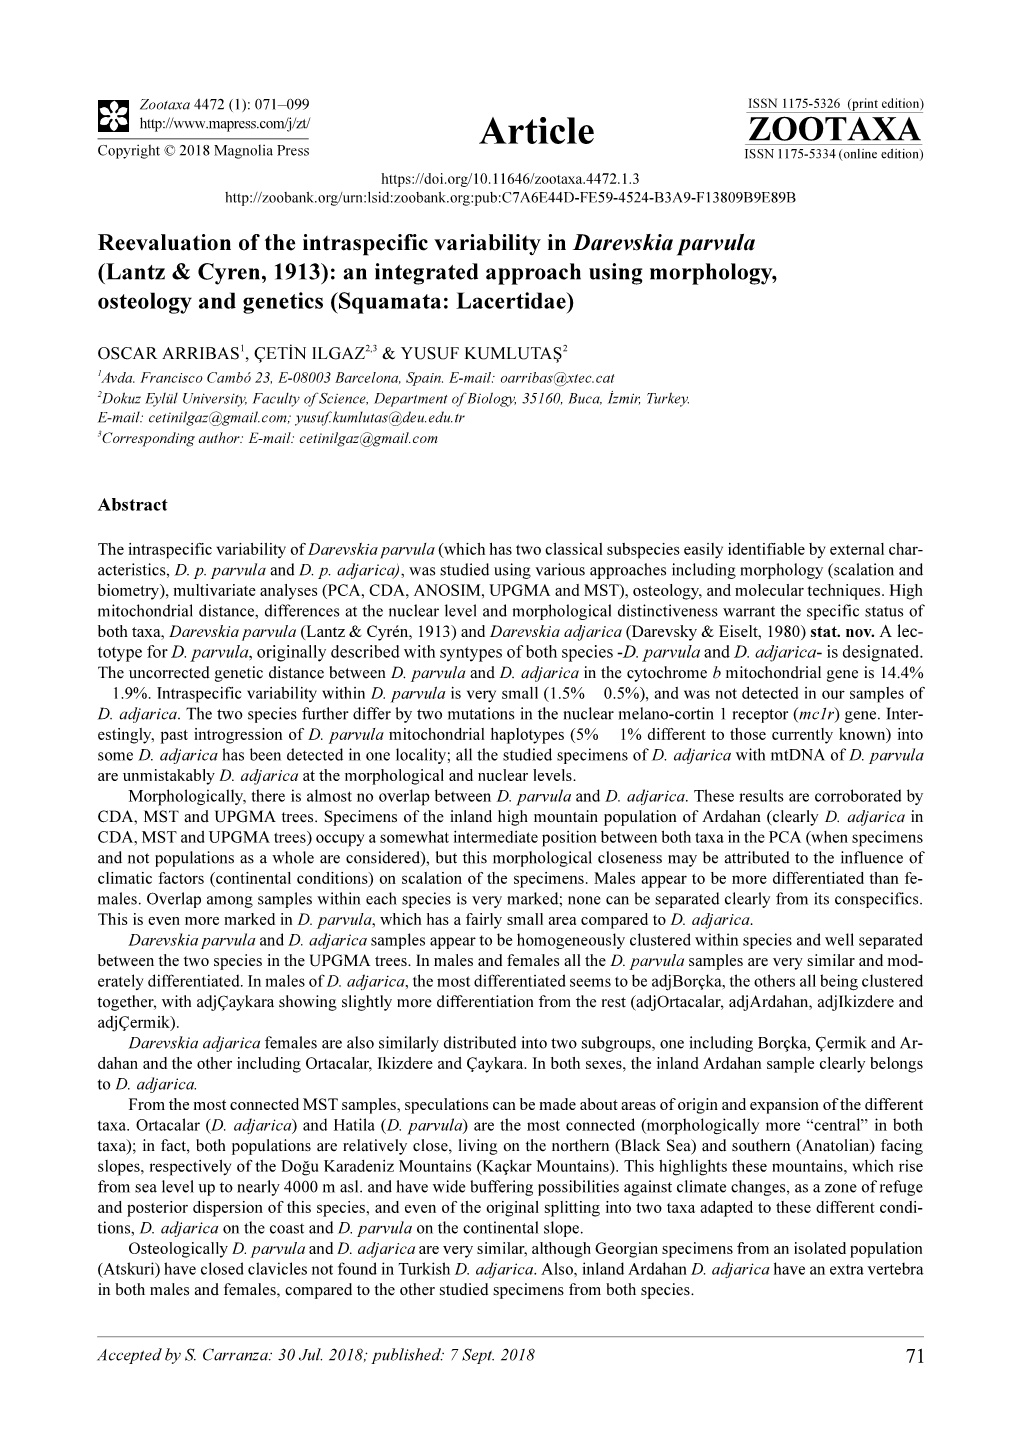 Reevaluation of the Intraspecific Variability in Darevskia Parvula